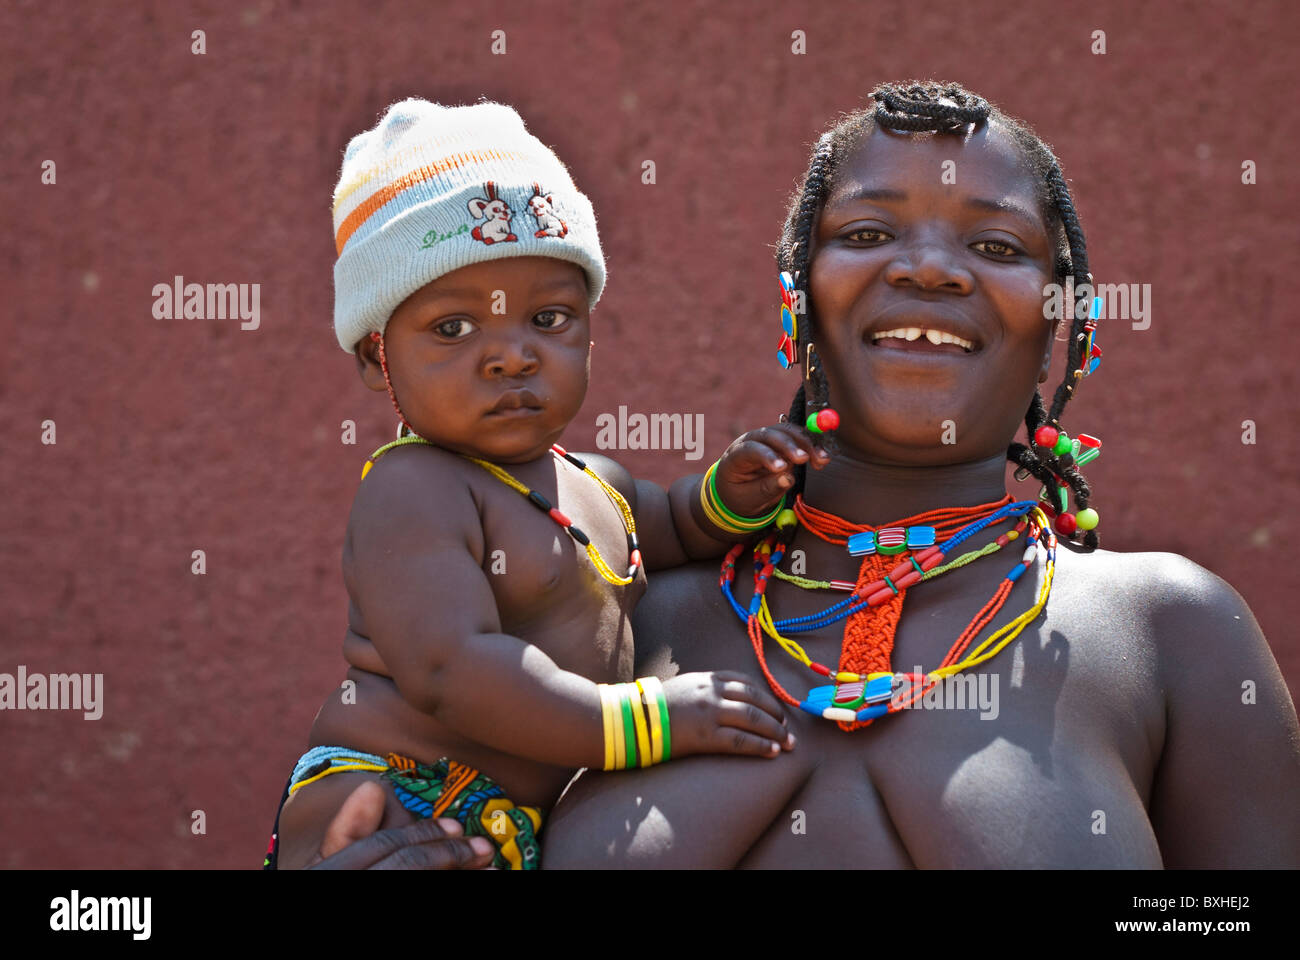 Mudimba Woman Wearing A Bra Holding Her Baby, Village Of Combelo, Angola  Stock Photo - Alamy